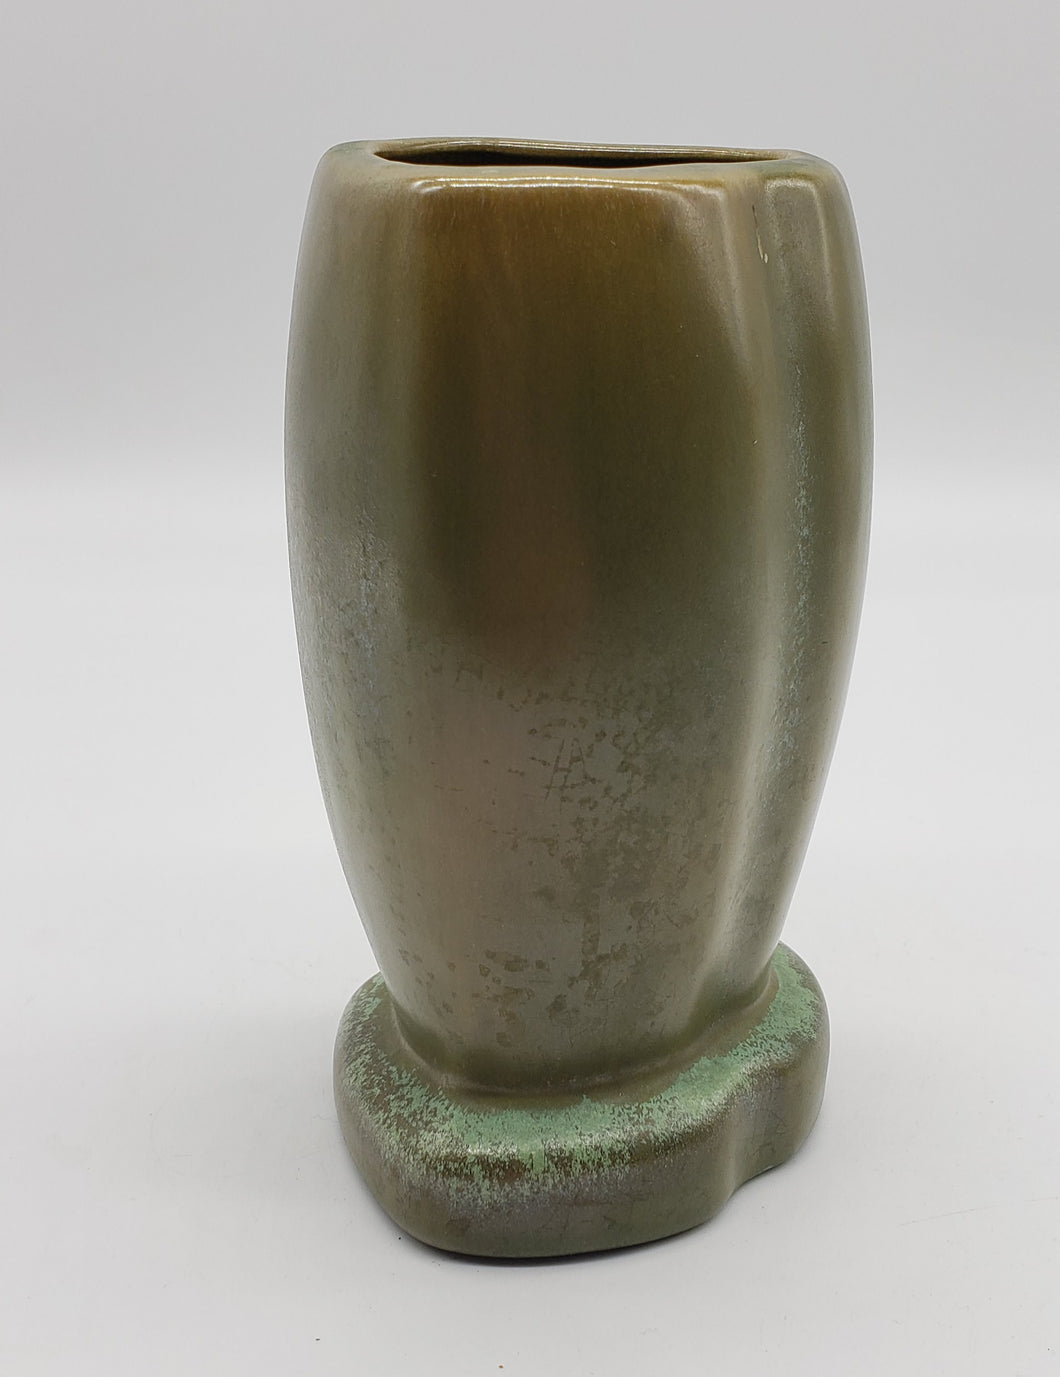 Frankoma type bud vase